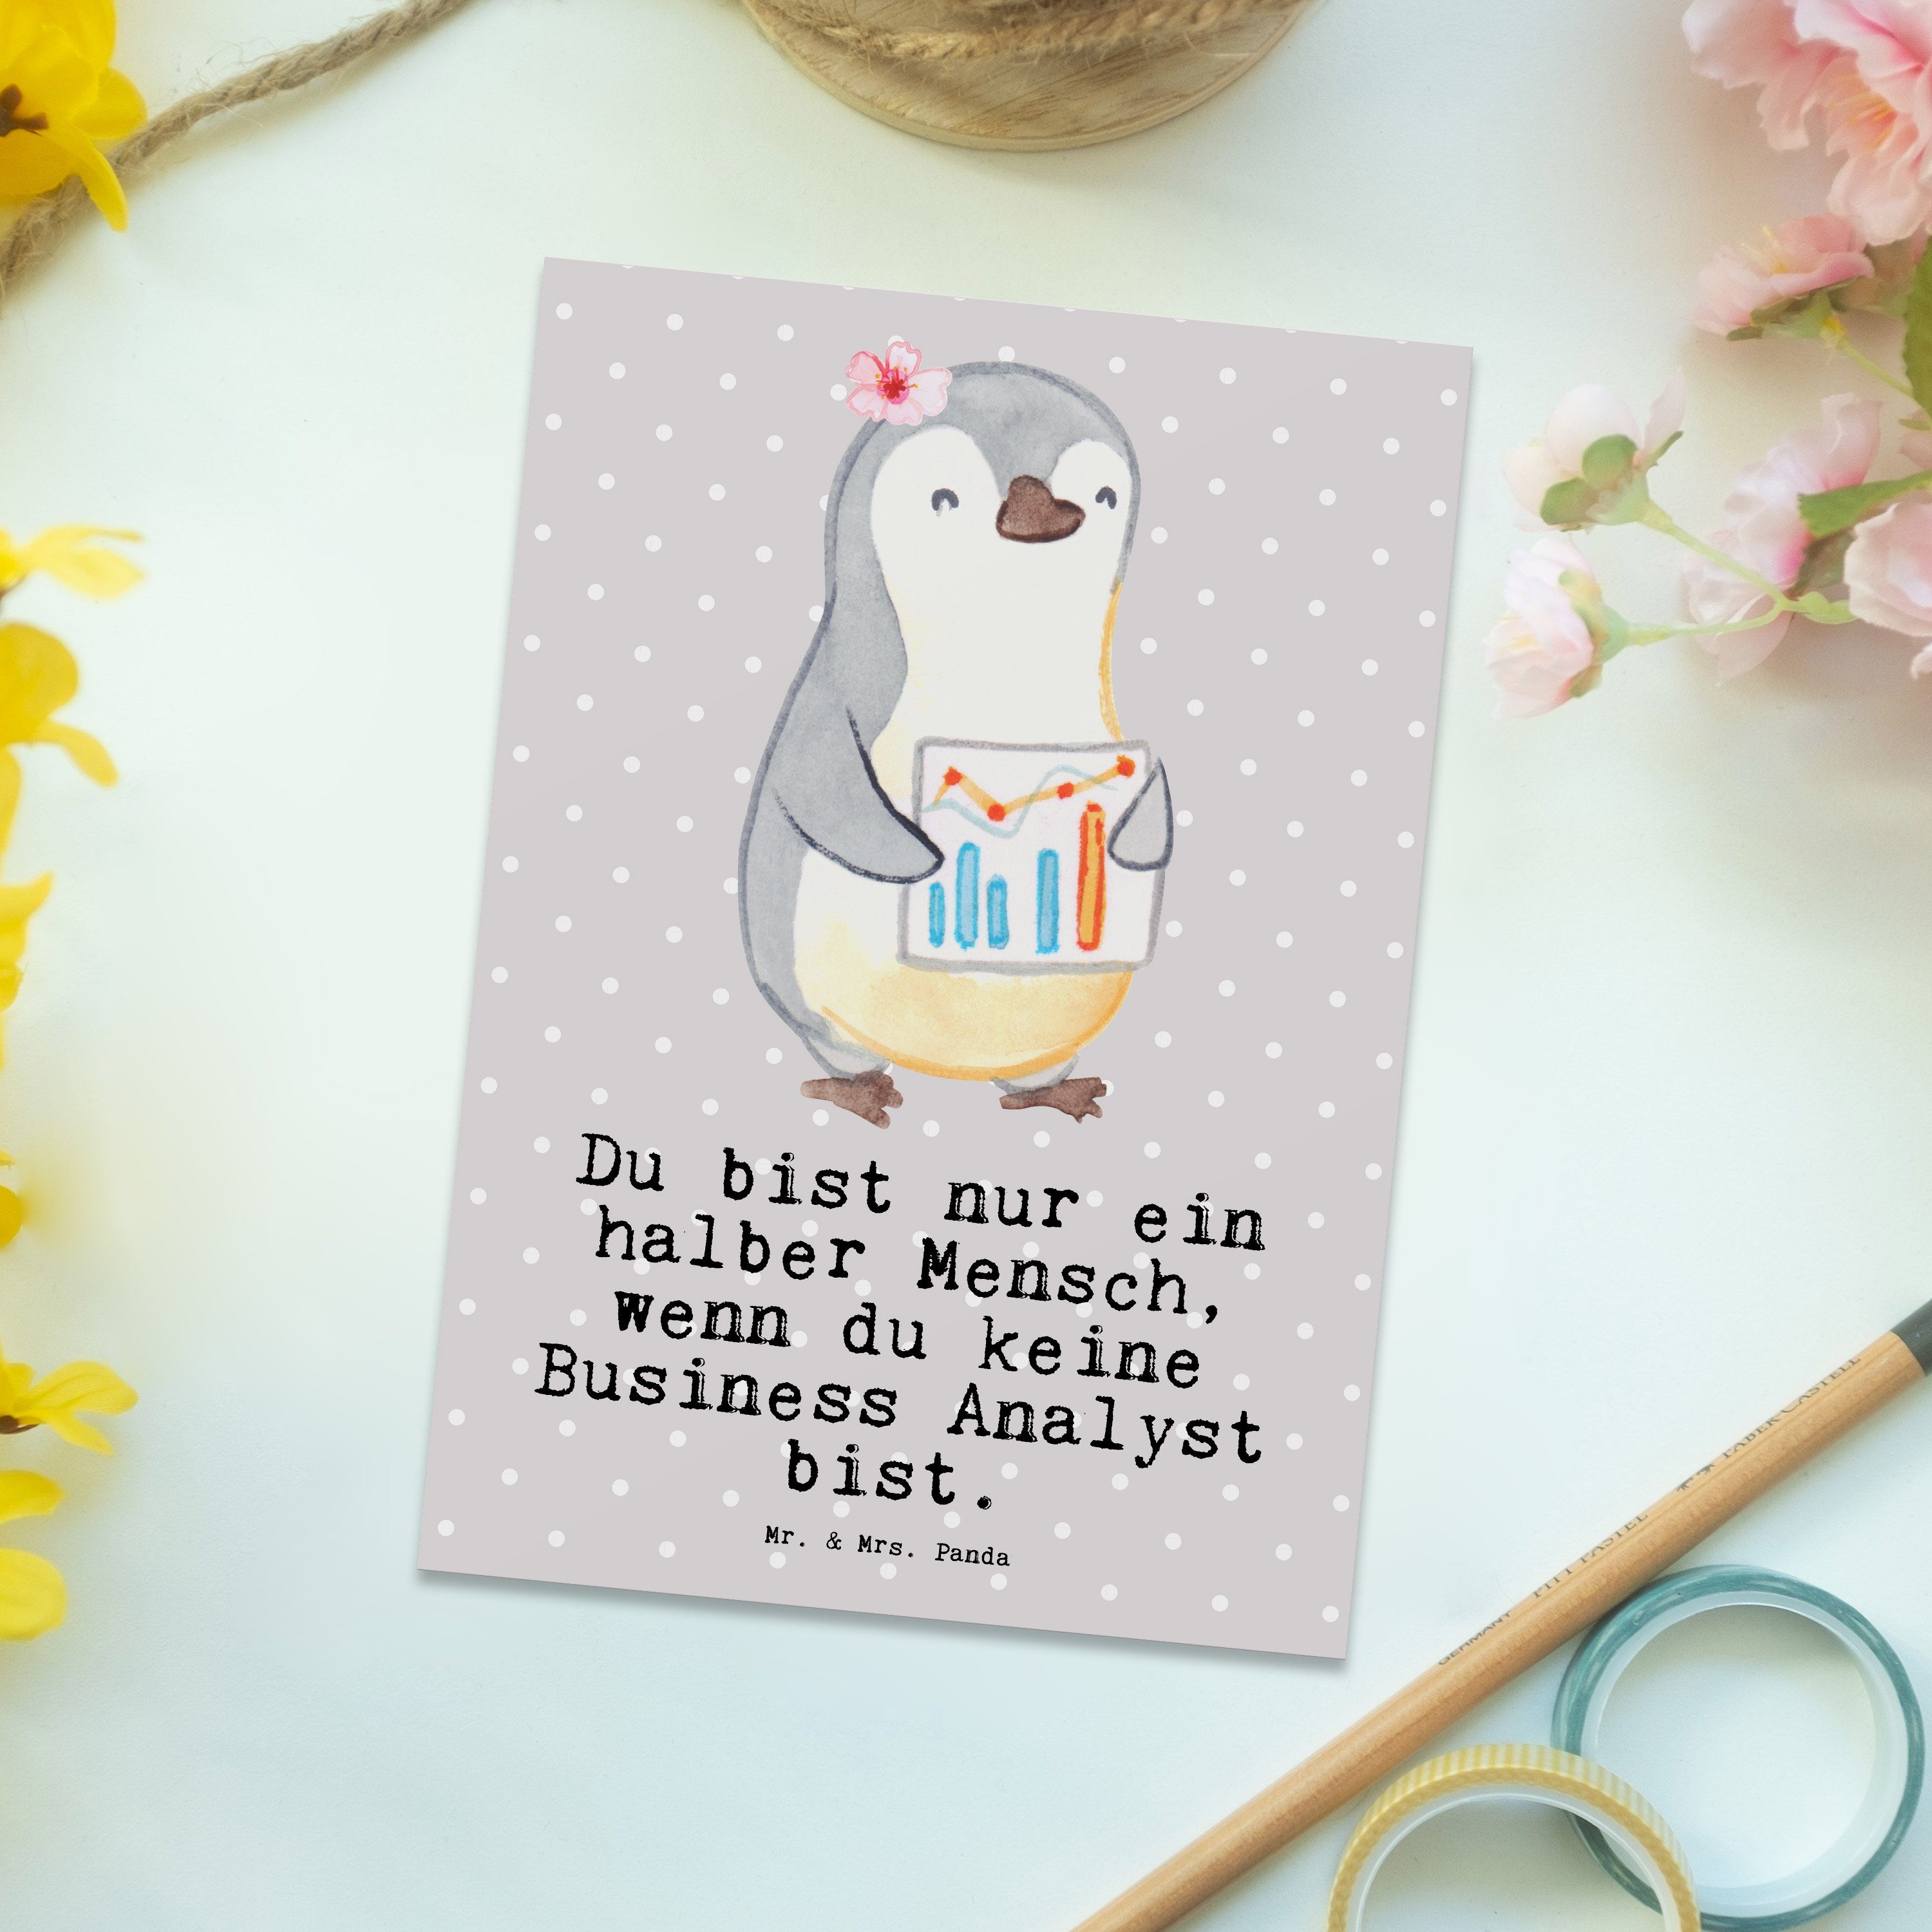 Mr. & Mrs. Panda Grau Geschenk, Firma mit Postkarte Analyst Herz Business Kollege, - Pastell 